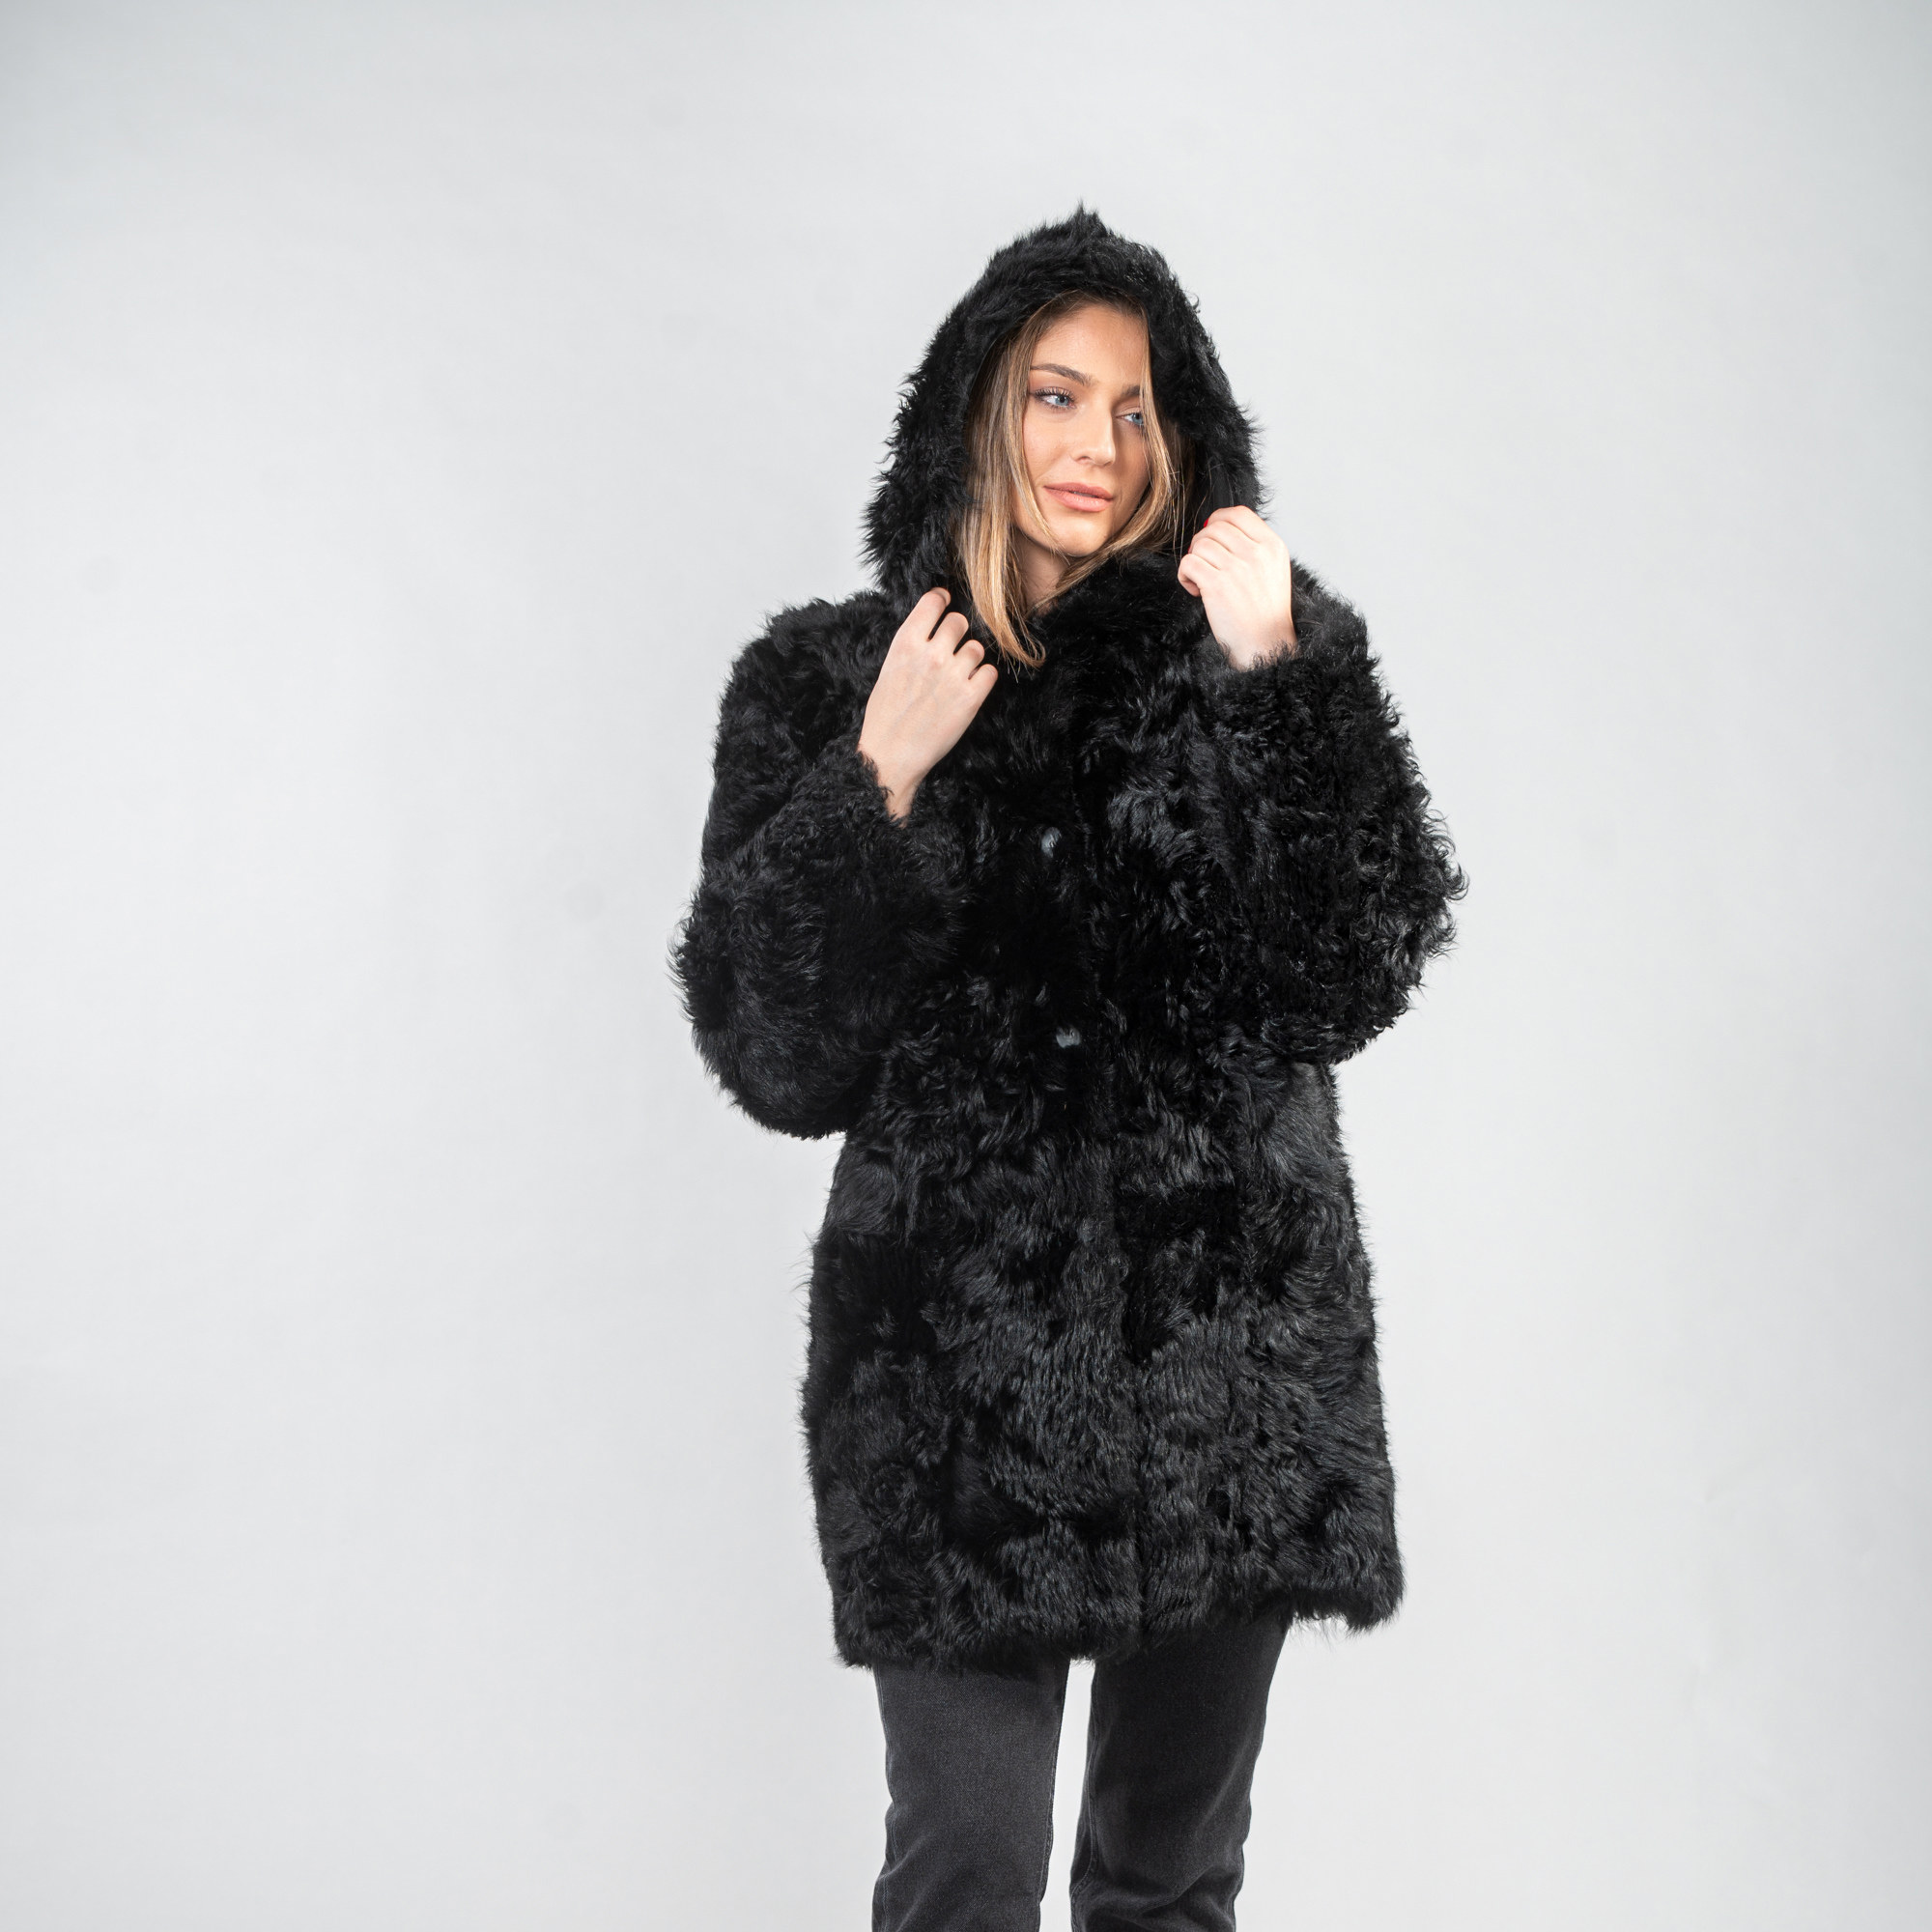 Black reversible sheepskin coat with a hood